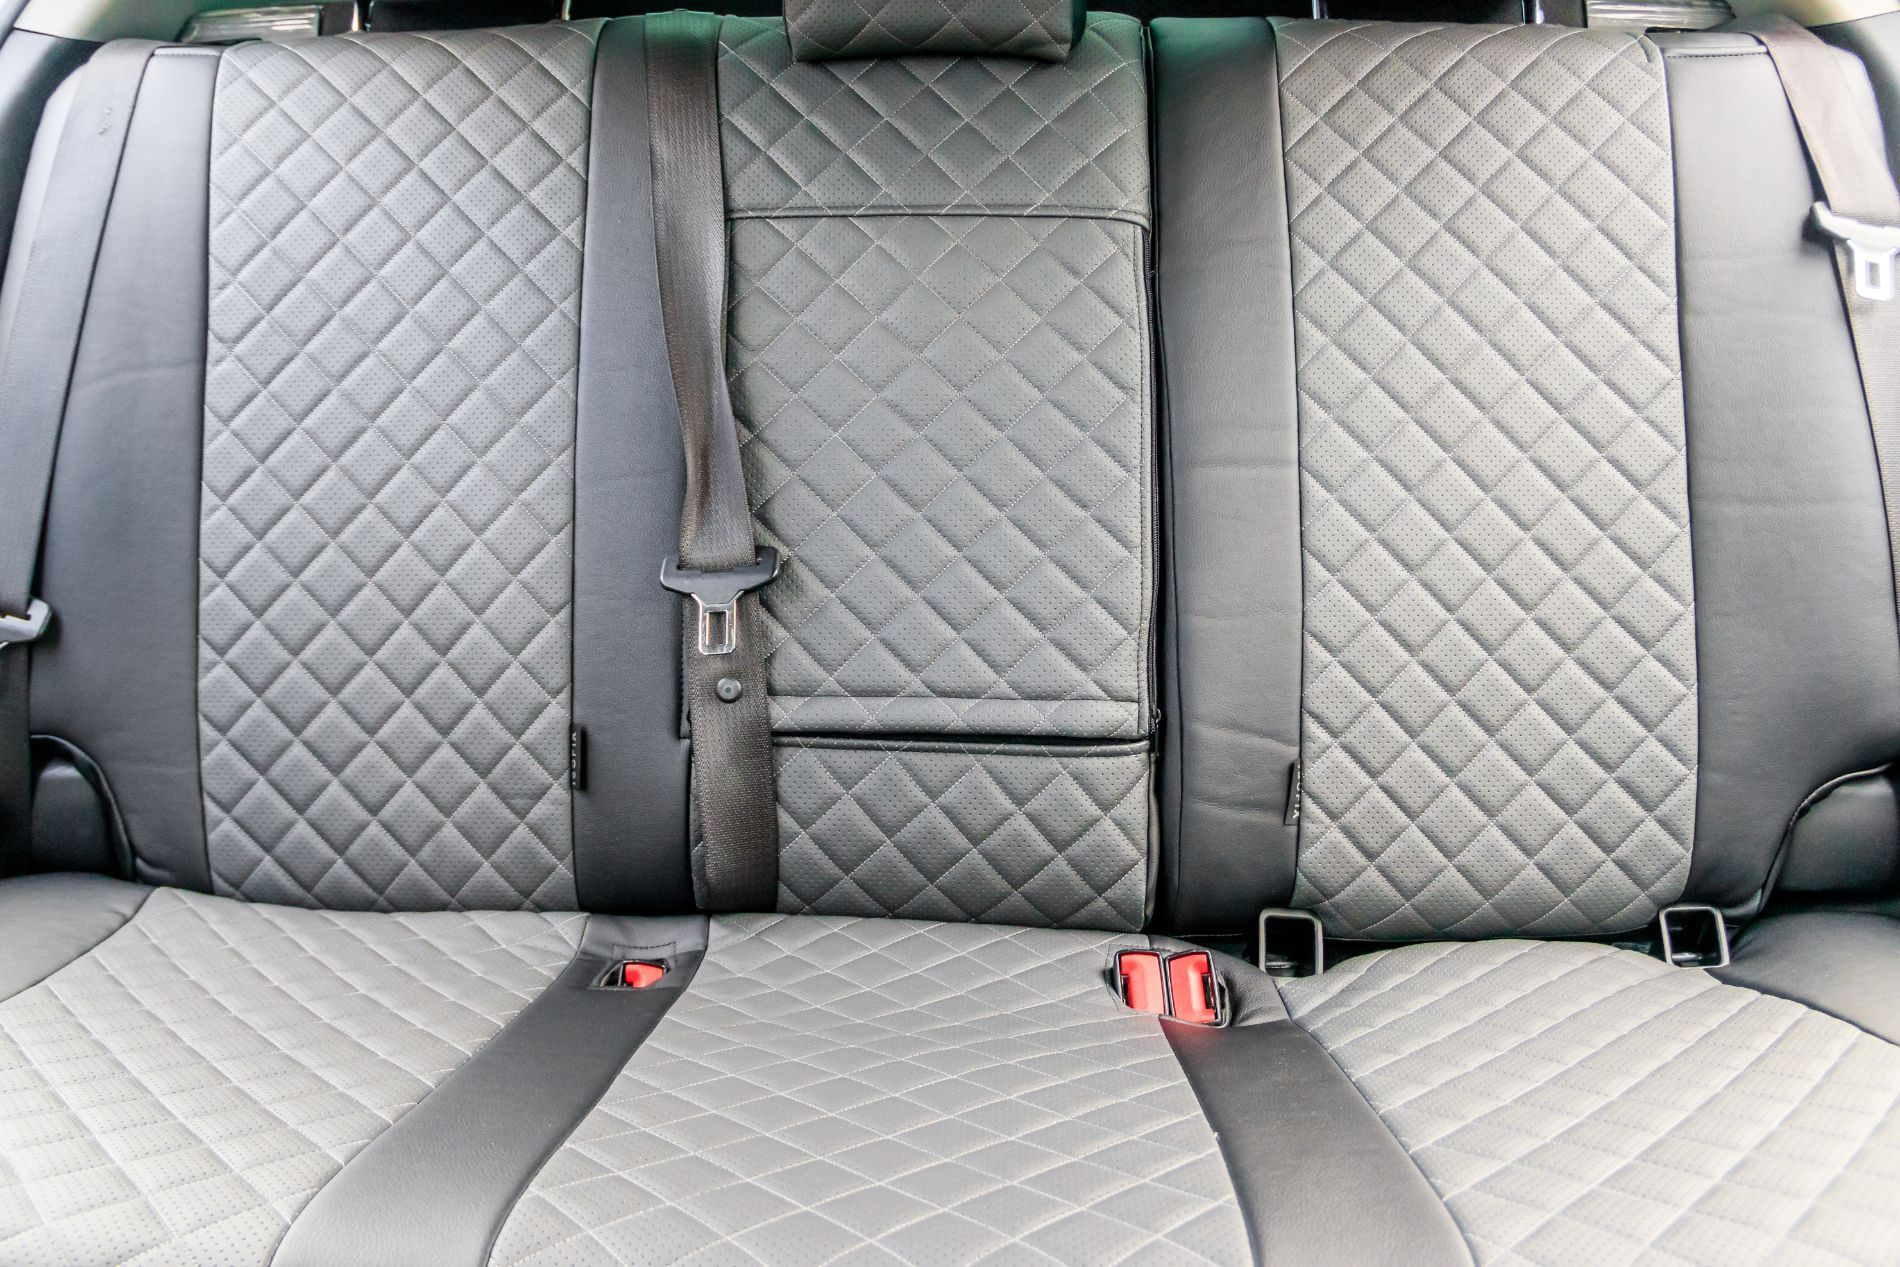 upholstered car interior rear seats